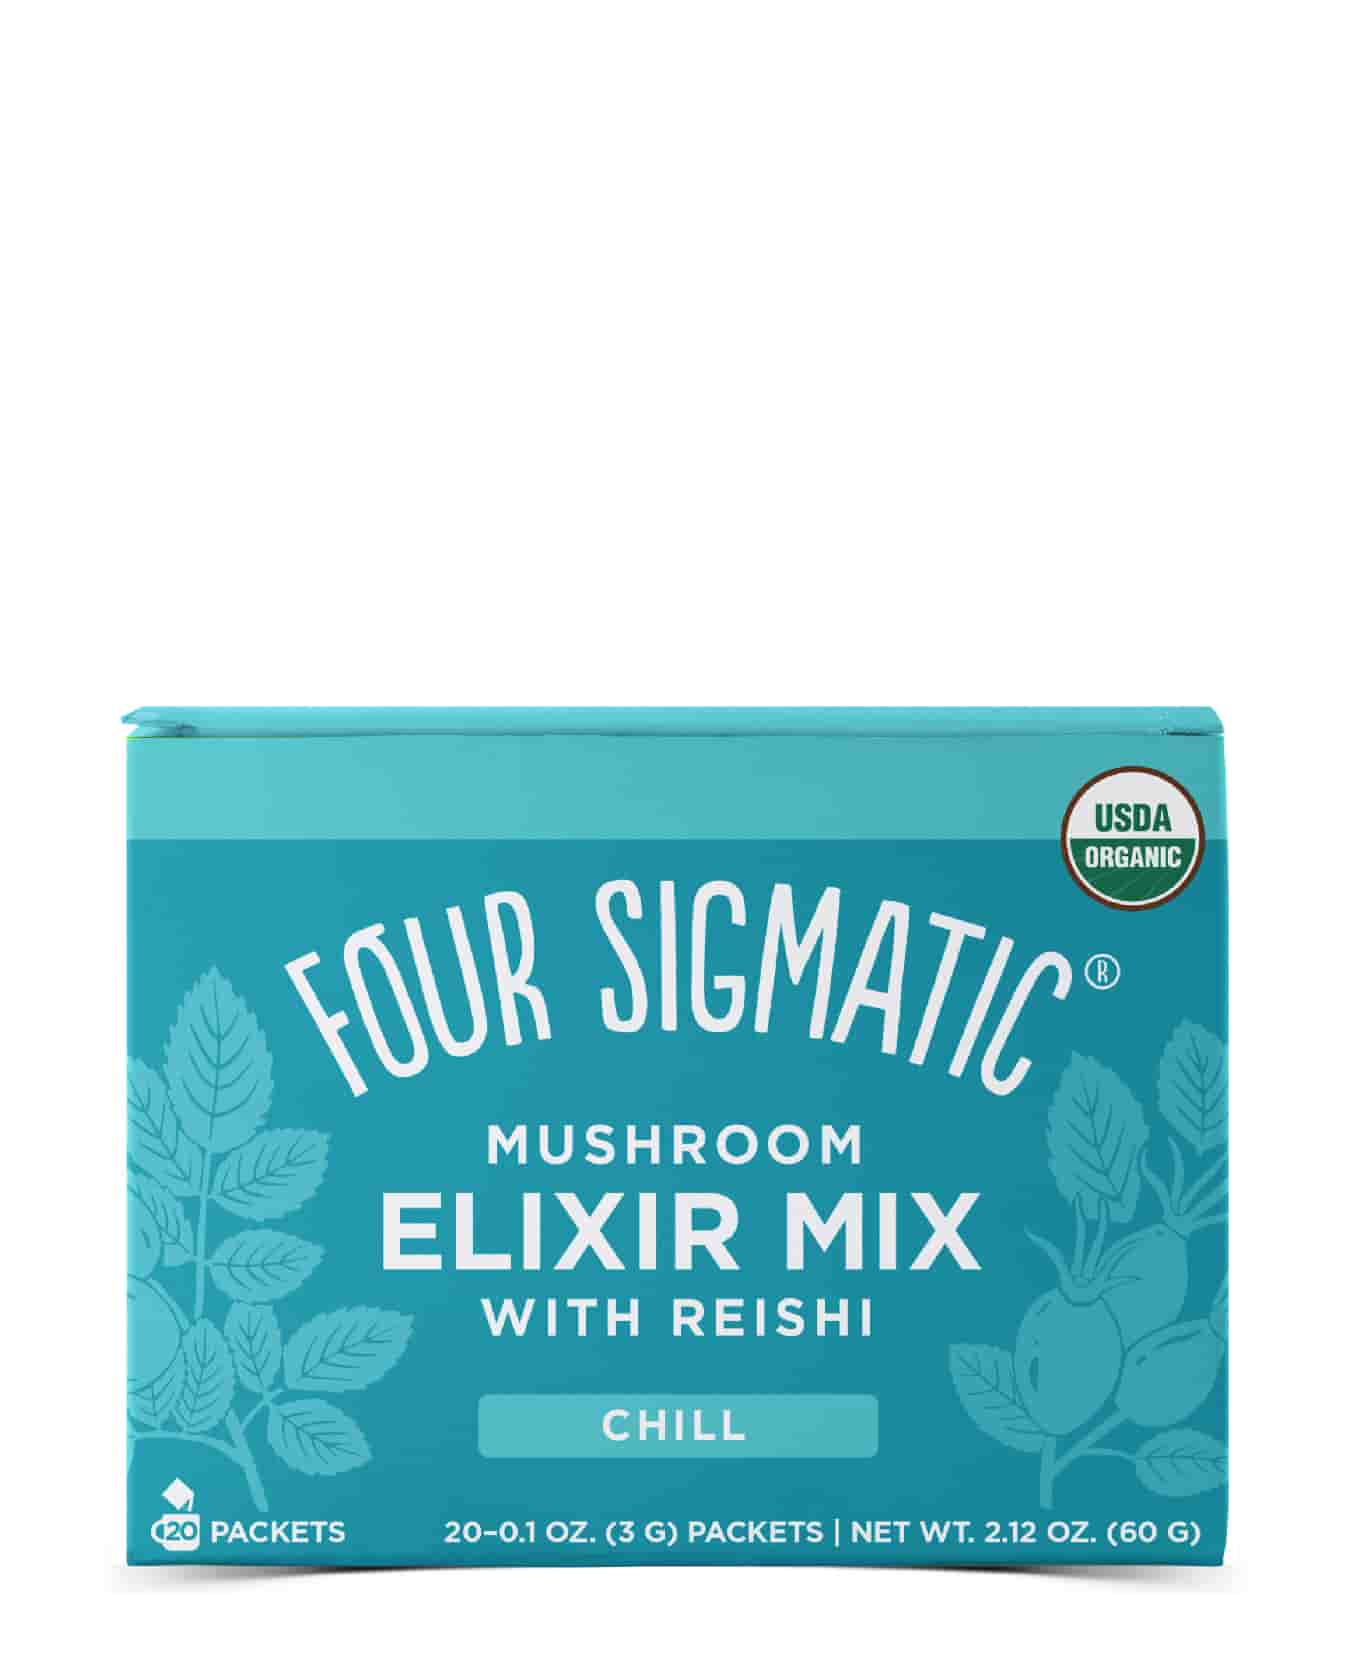 Four Sigmatic Reishi Mushroom Elixir Mix bei LiveHelfi kaufen